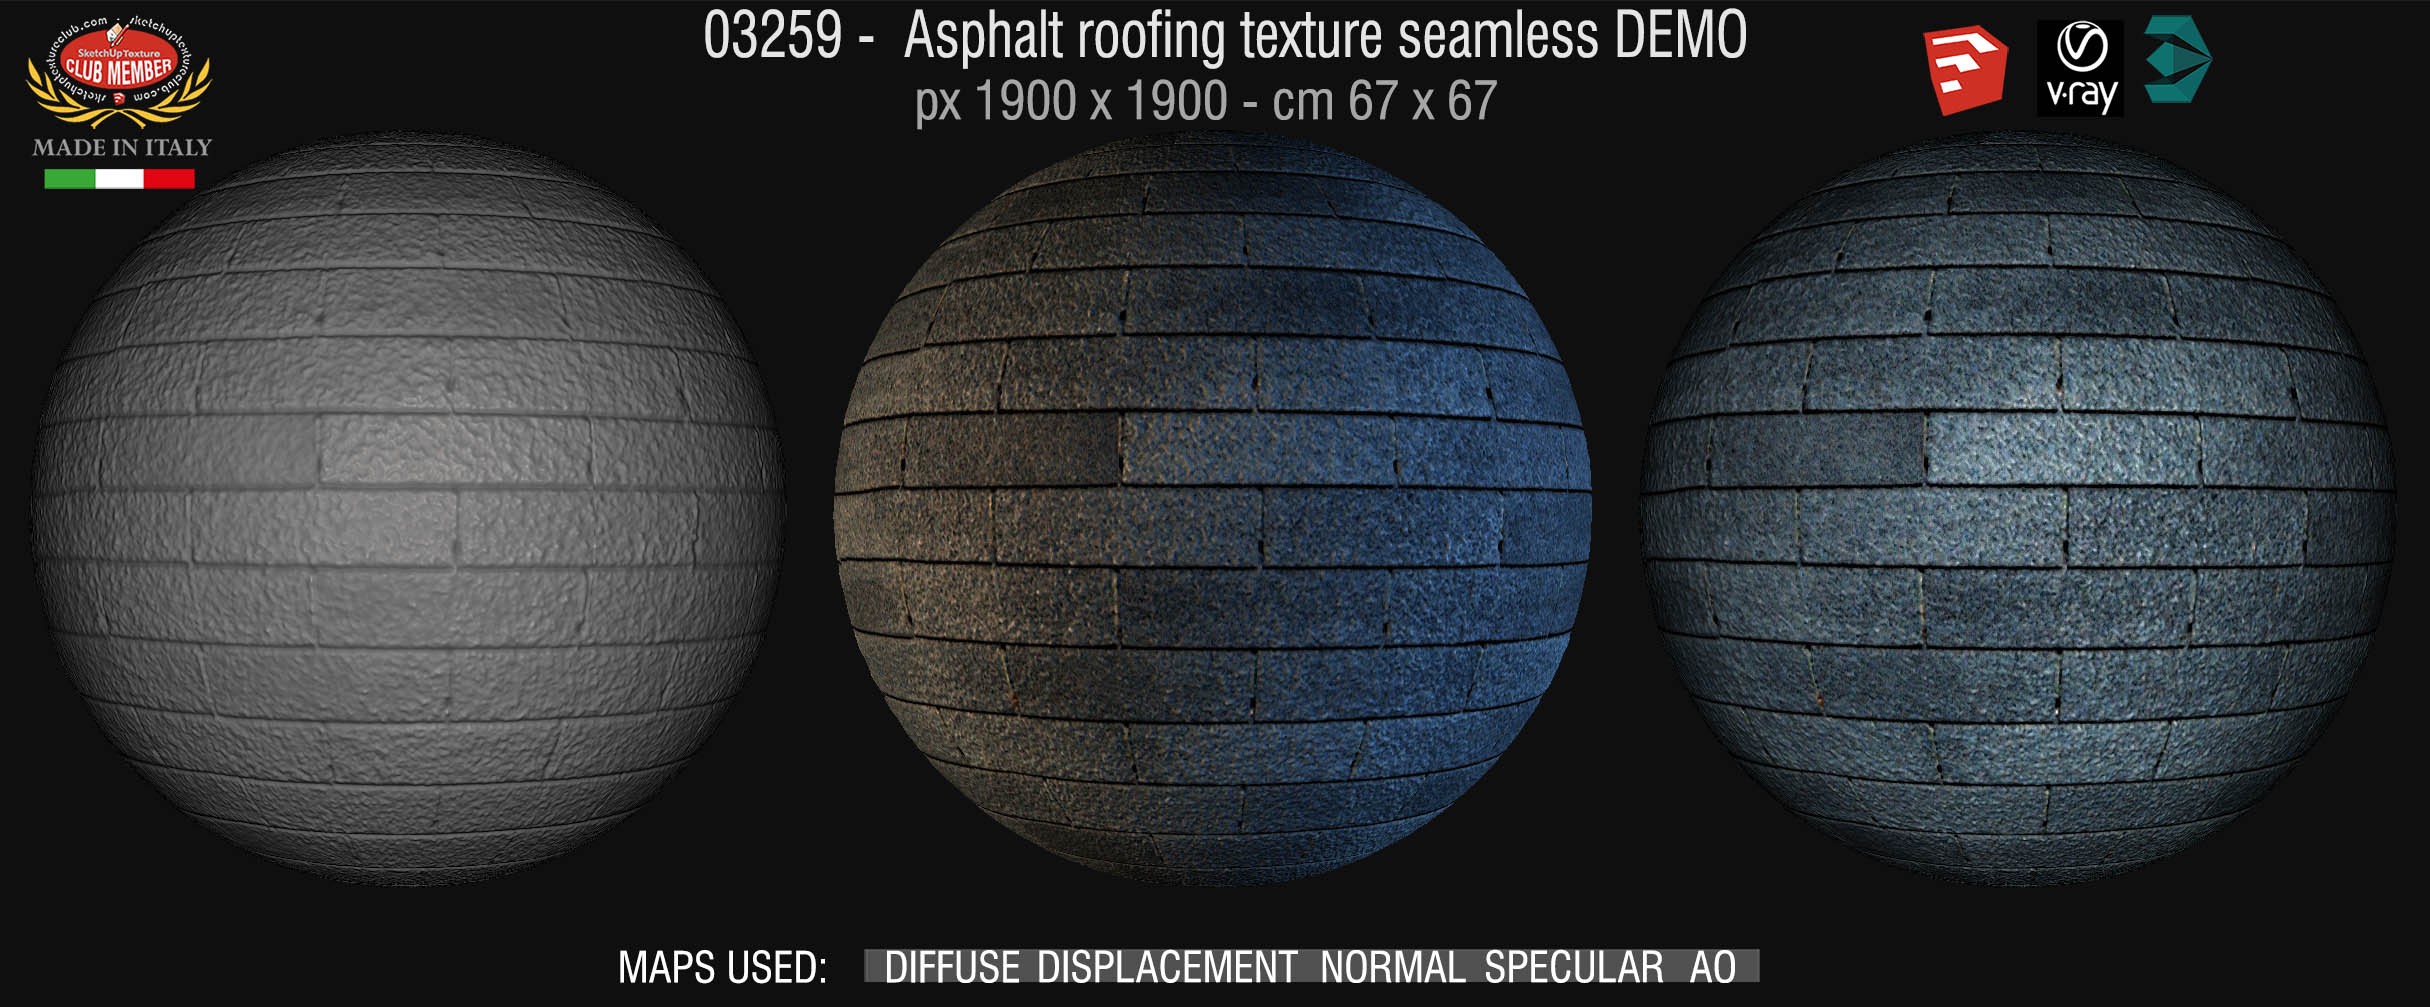 03259 Asphalt roofing texture seamless + maps DEMO